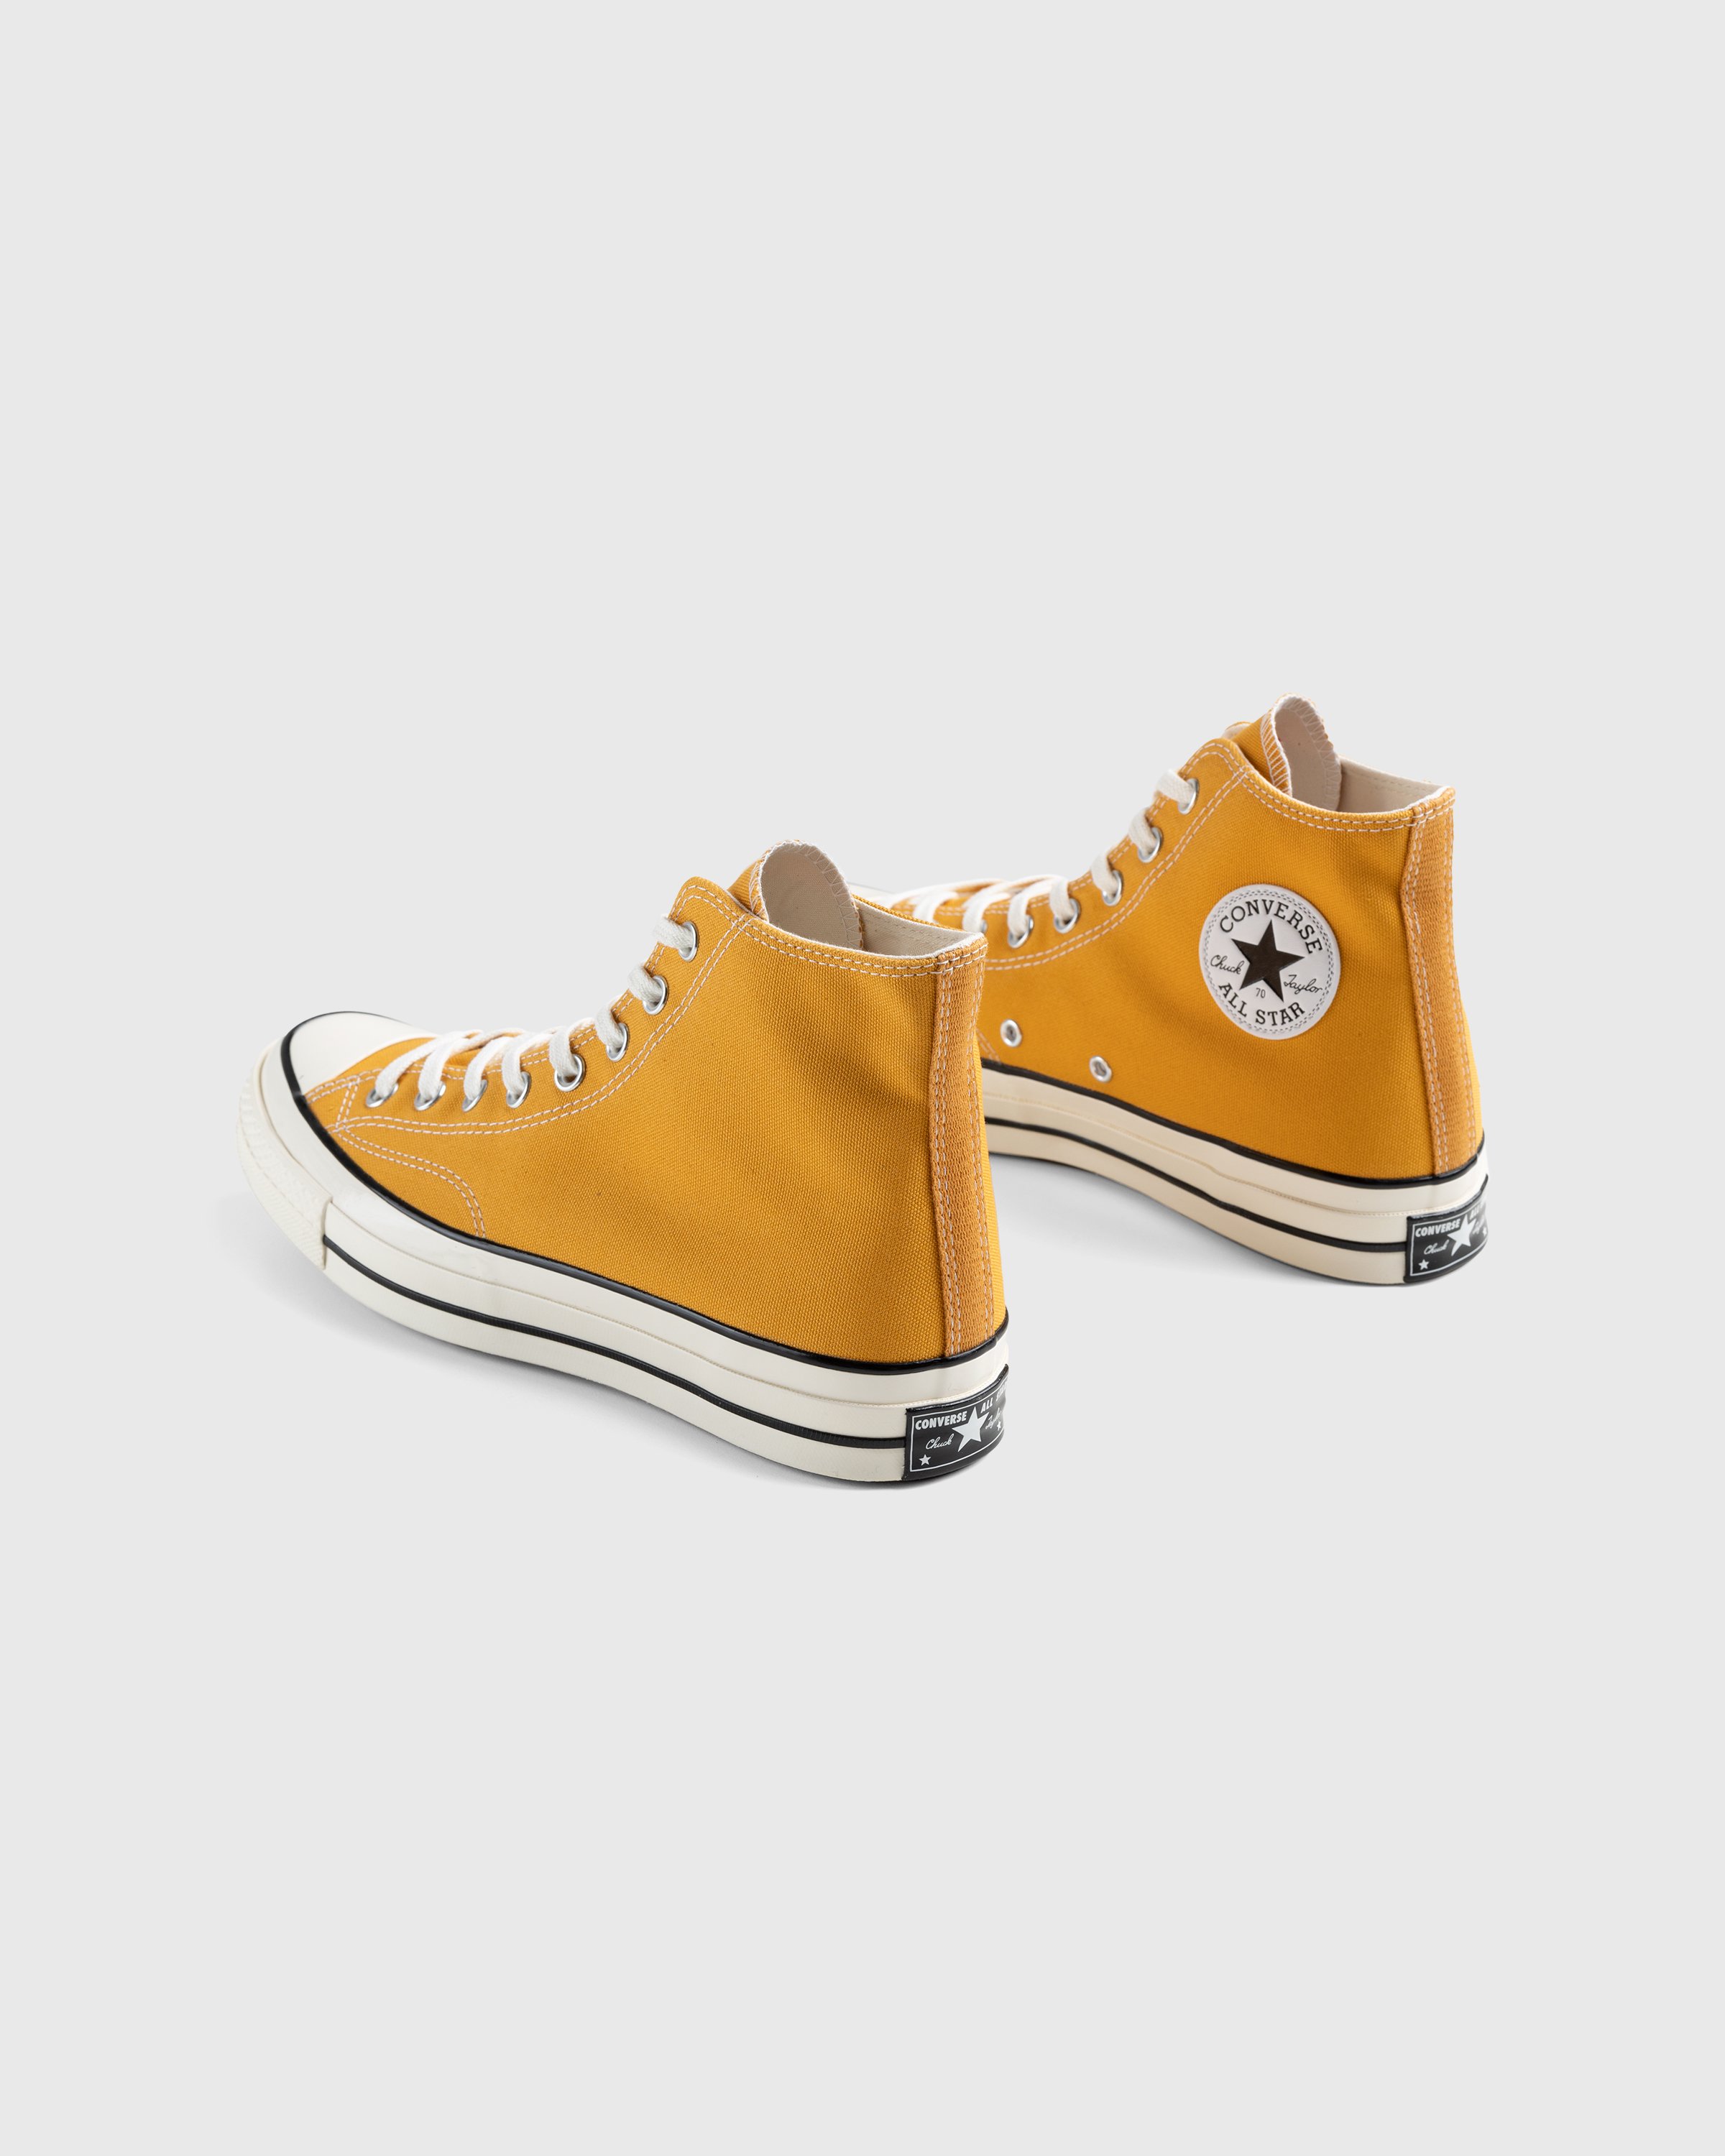 Converse - Chuck 70 Hi Sunflower/Black/Egret - Footwear - Orange - Image 4